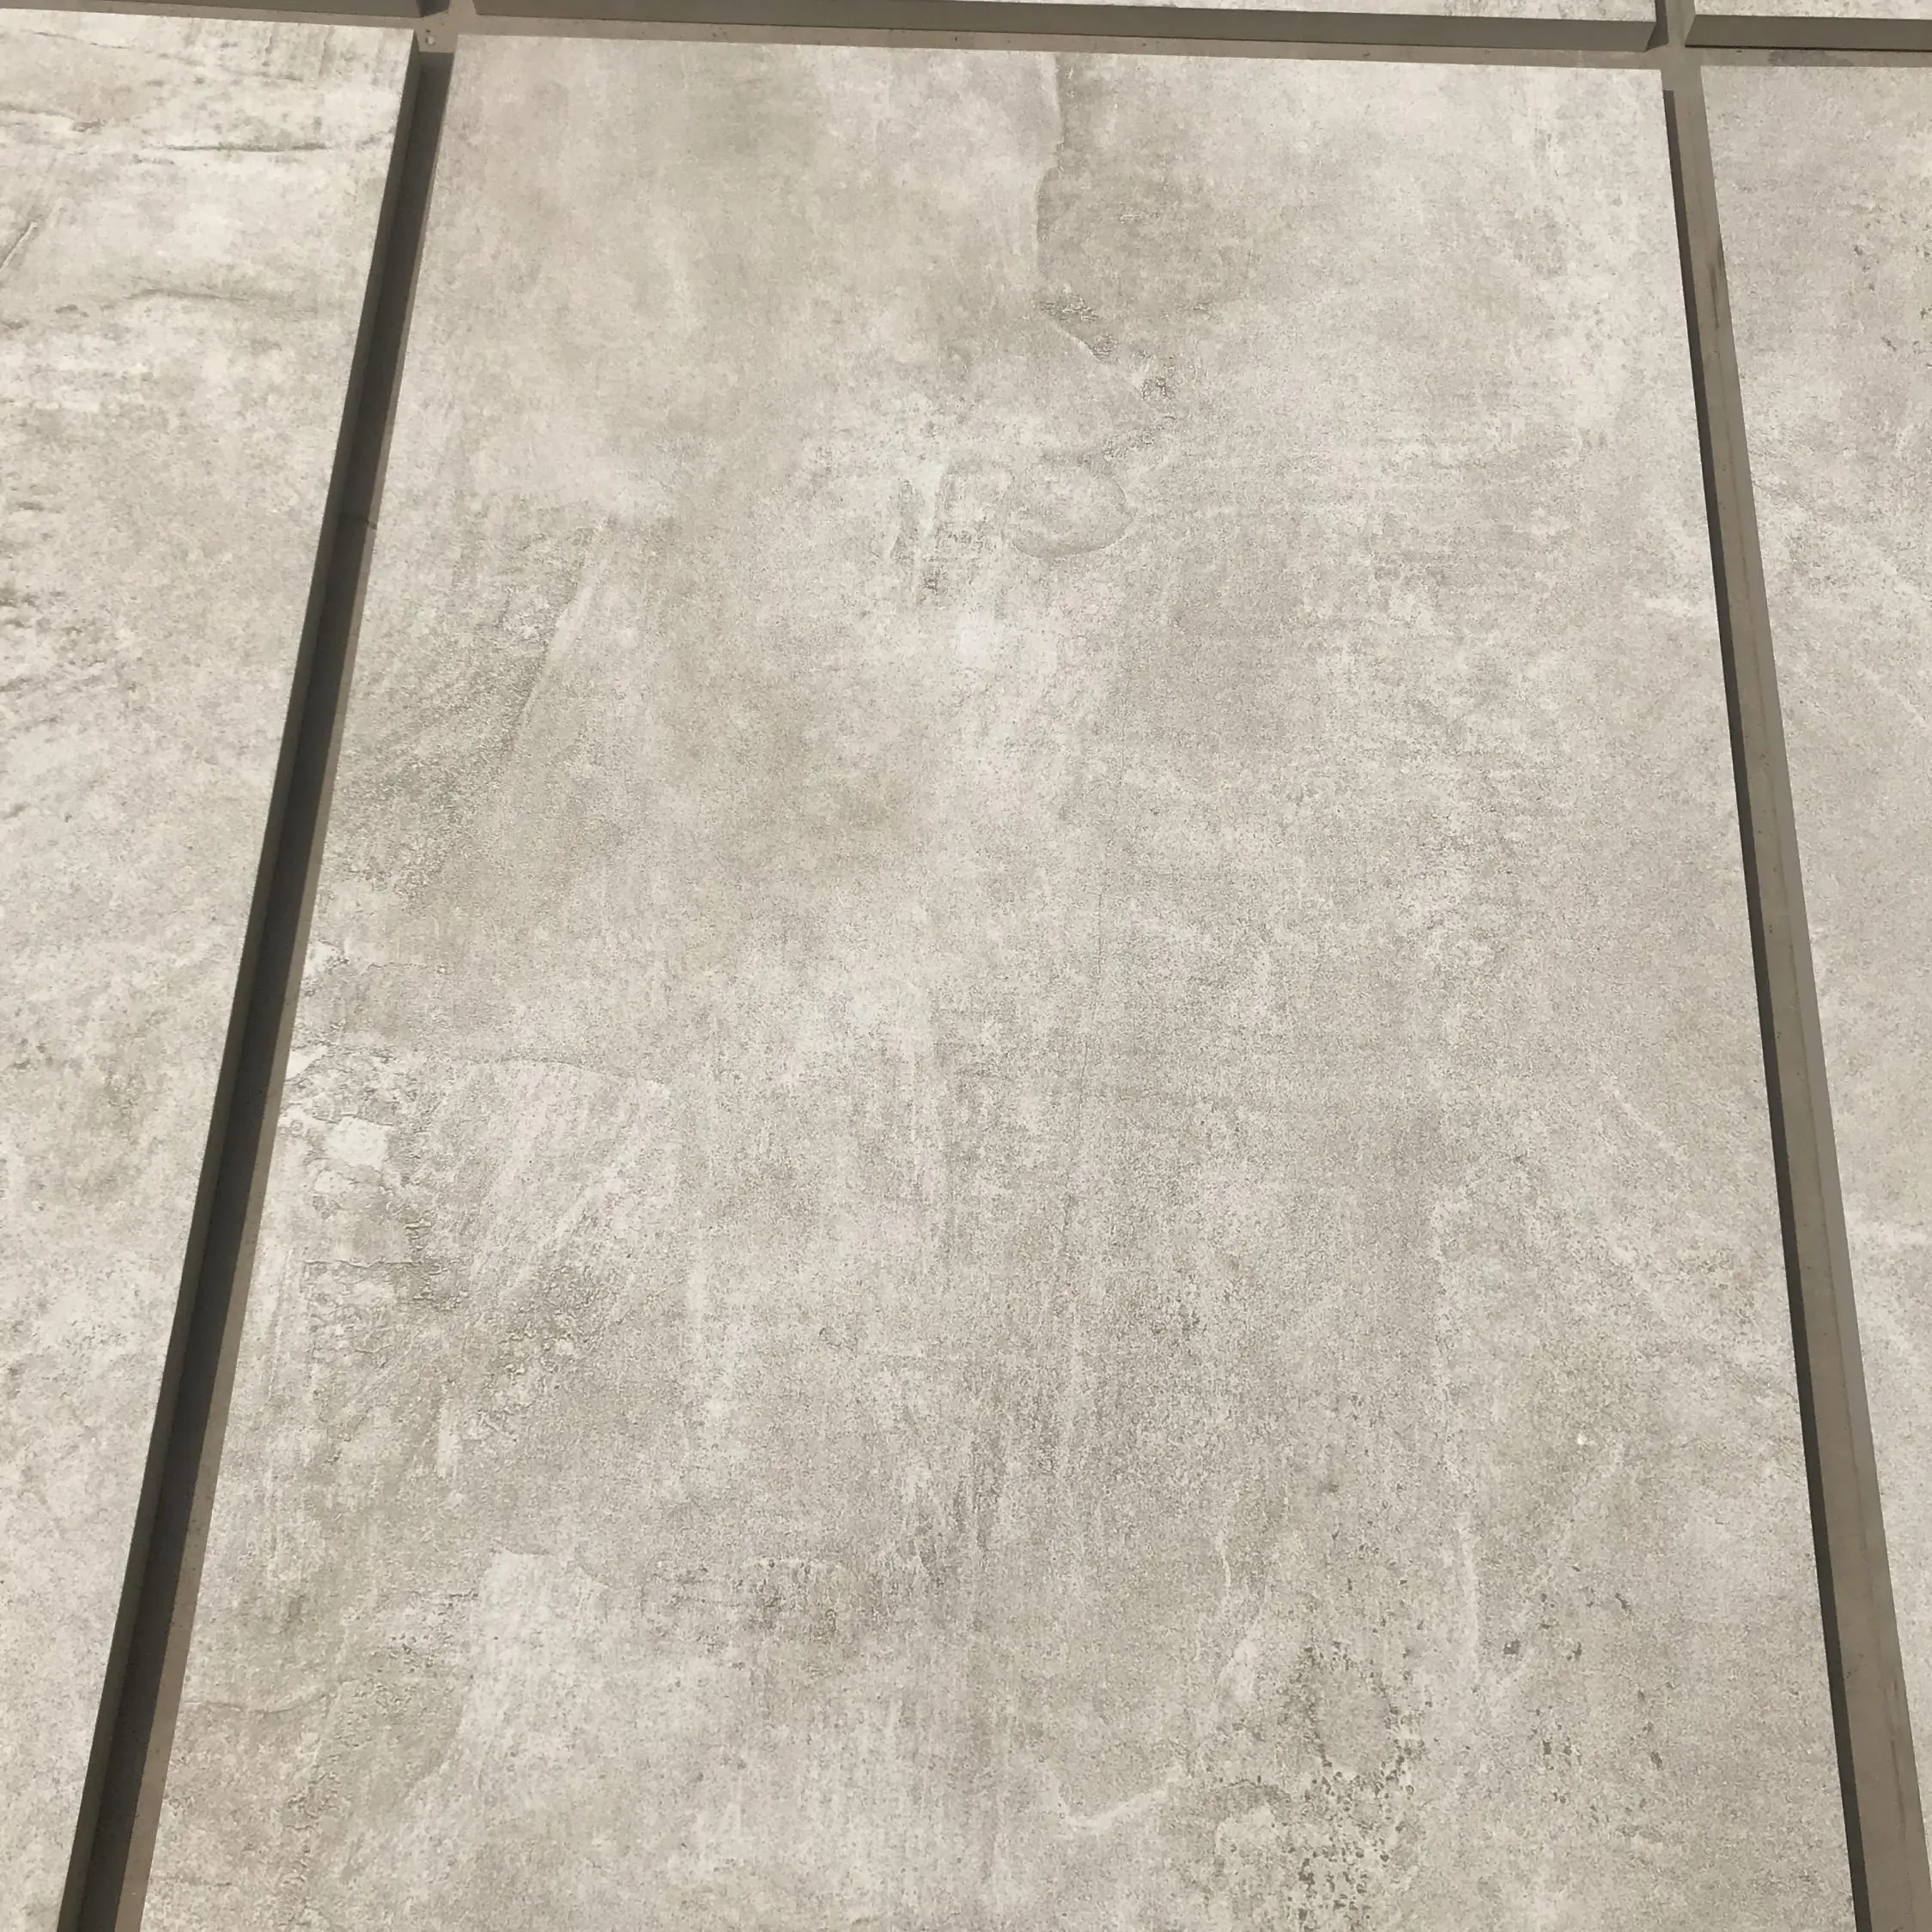 24x24 Rustic Rough Full Body Granite Heavy Duty Grey 20mm Outdoor Porcelain Floor Tiles Over Concrete Floor Tiles OEM Services